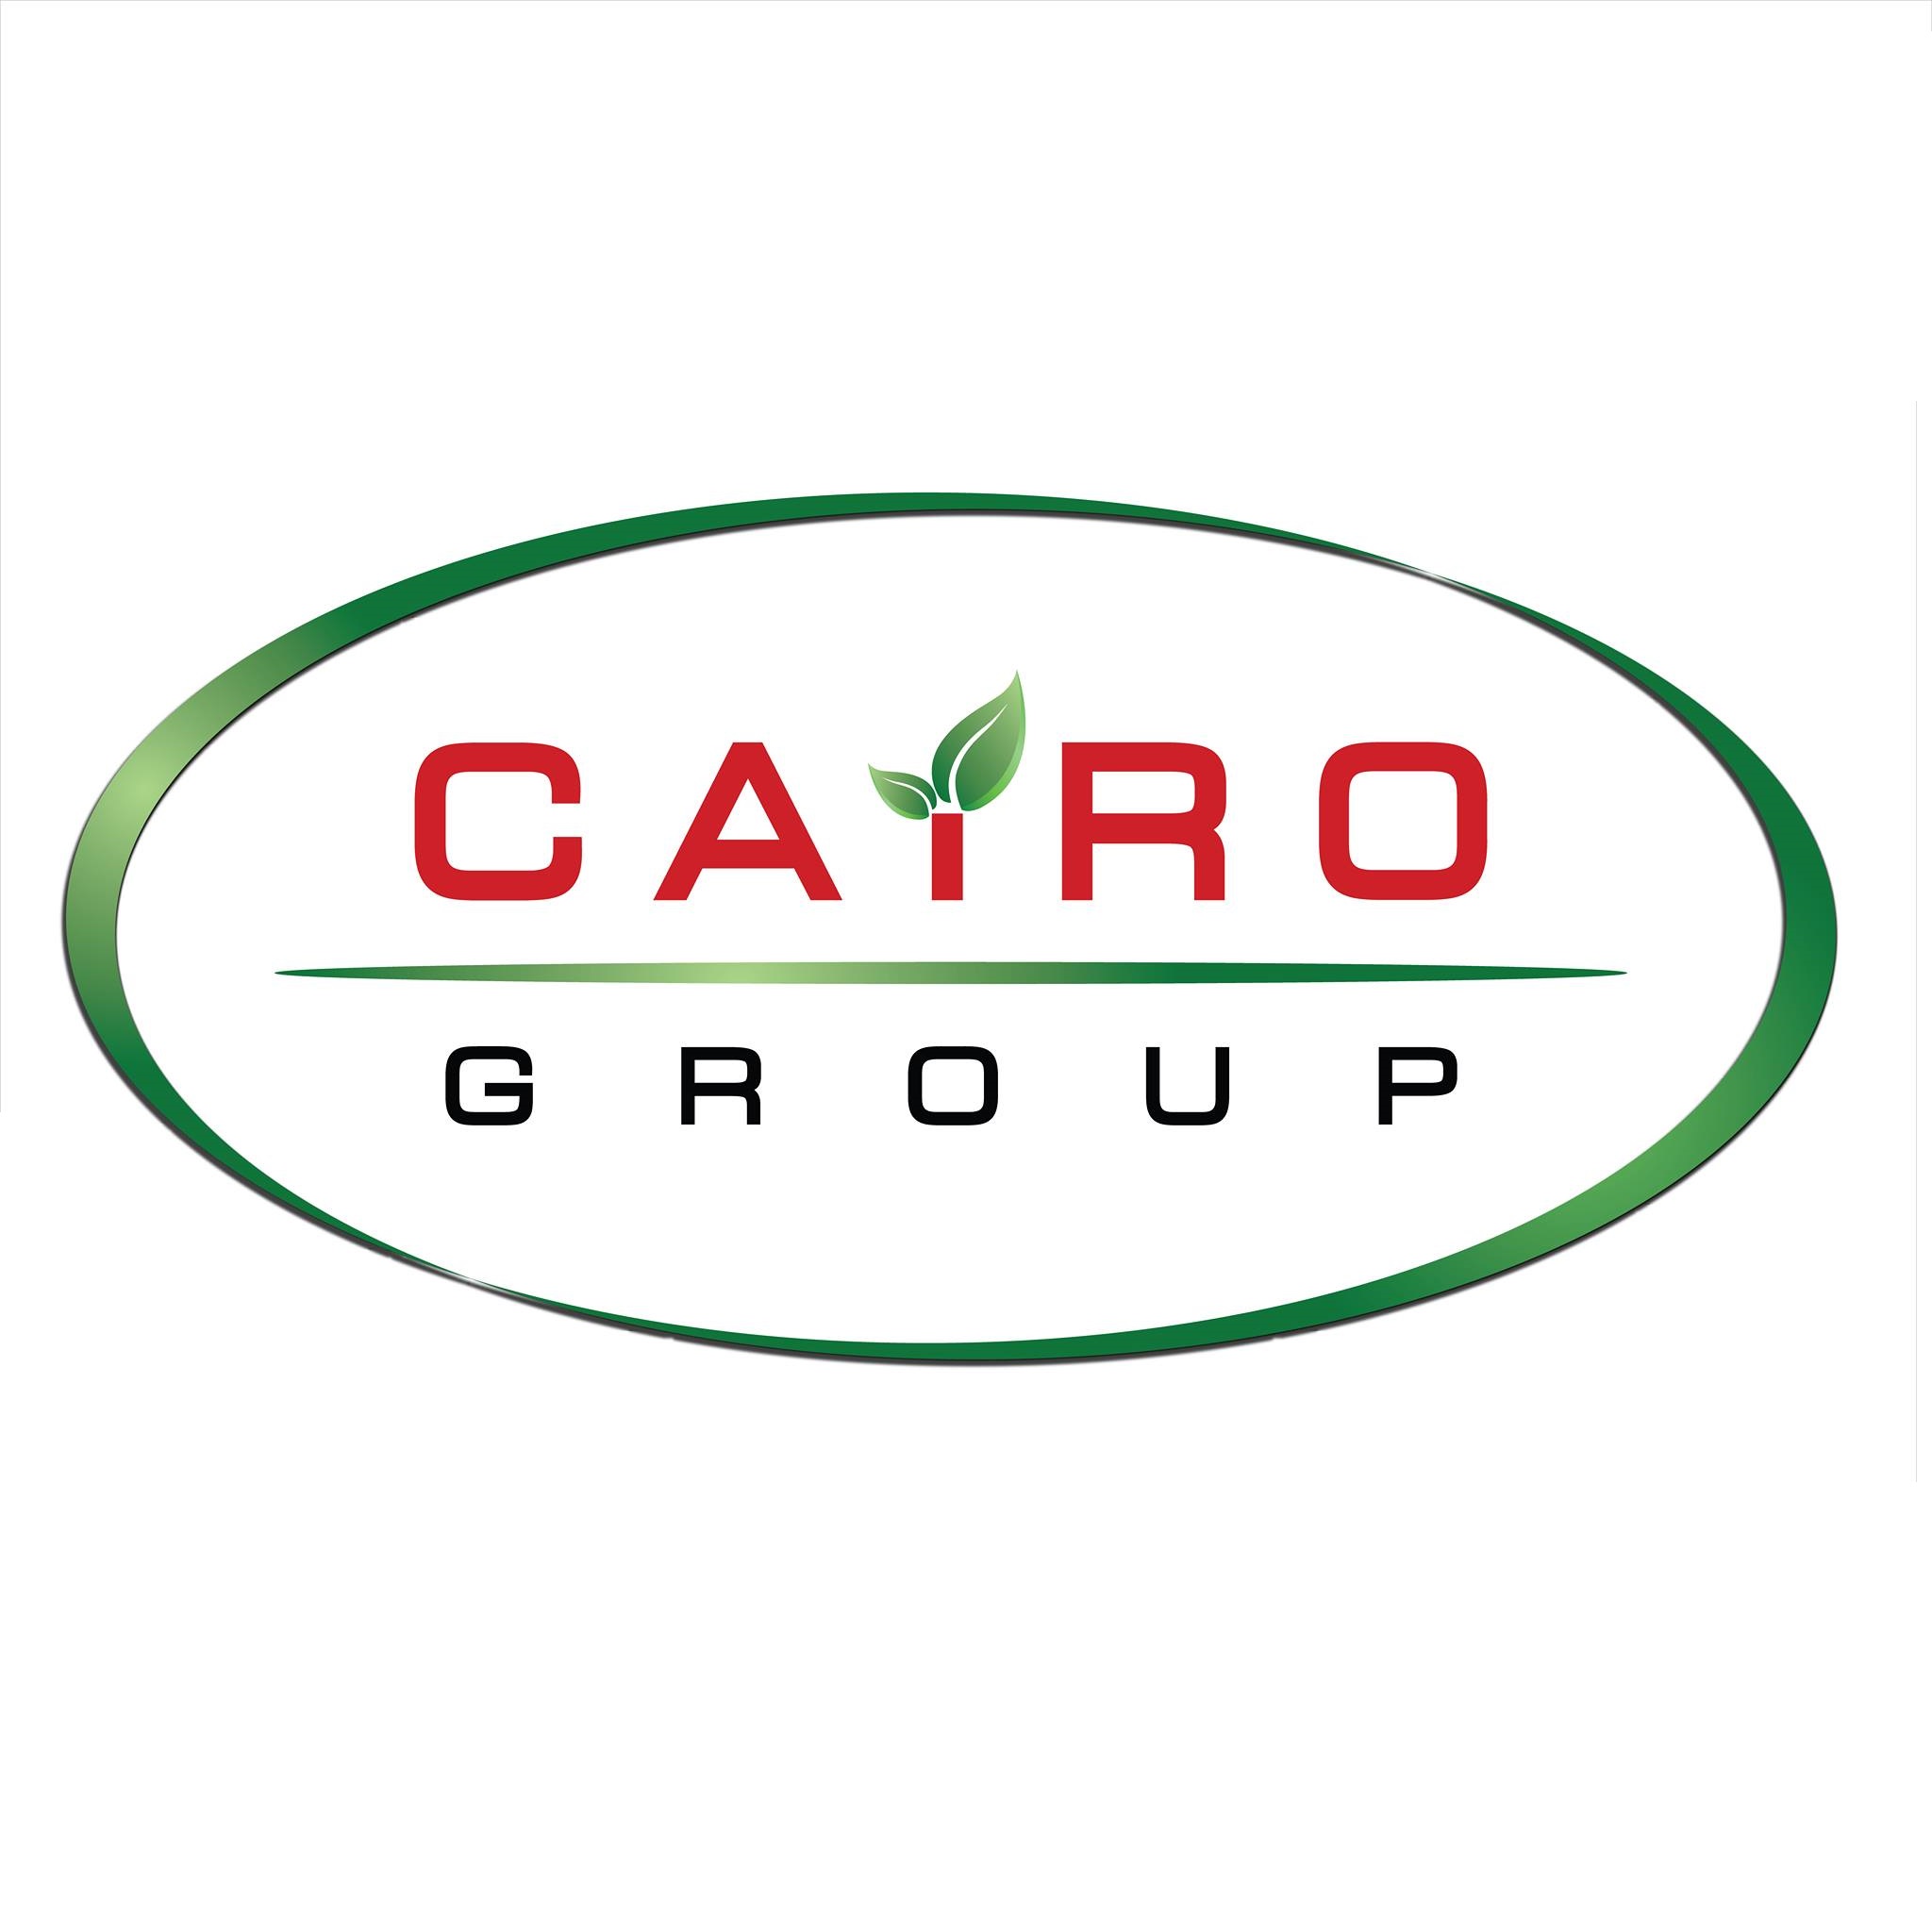 Cairo Group Company